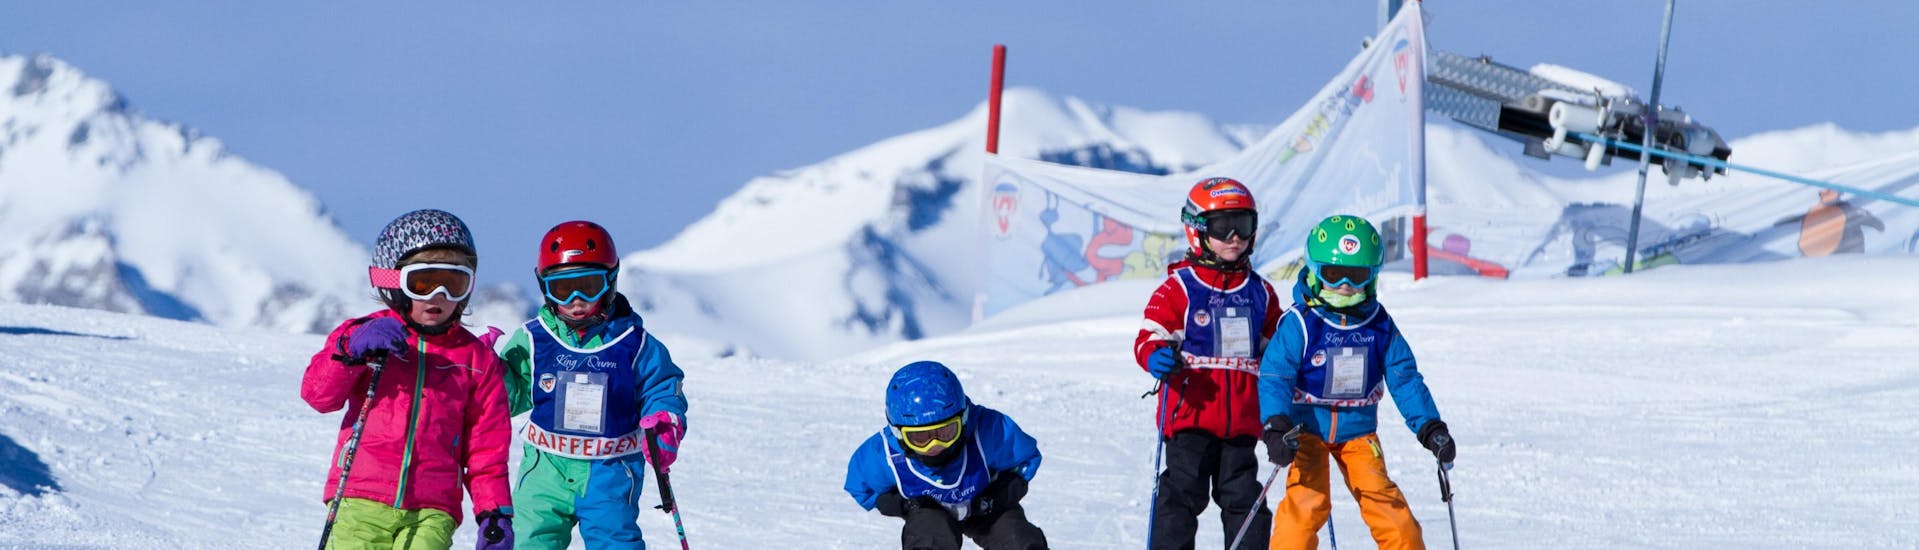 Kids Ski Lessons (3-7 y.) for Beginners - Full Day.